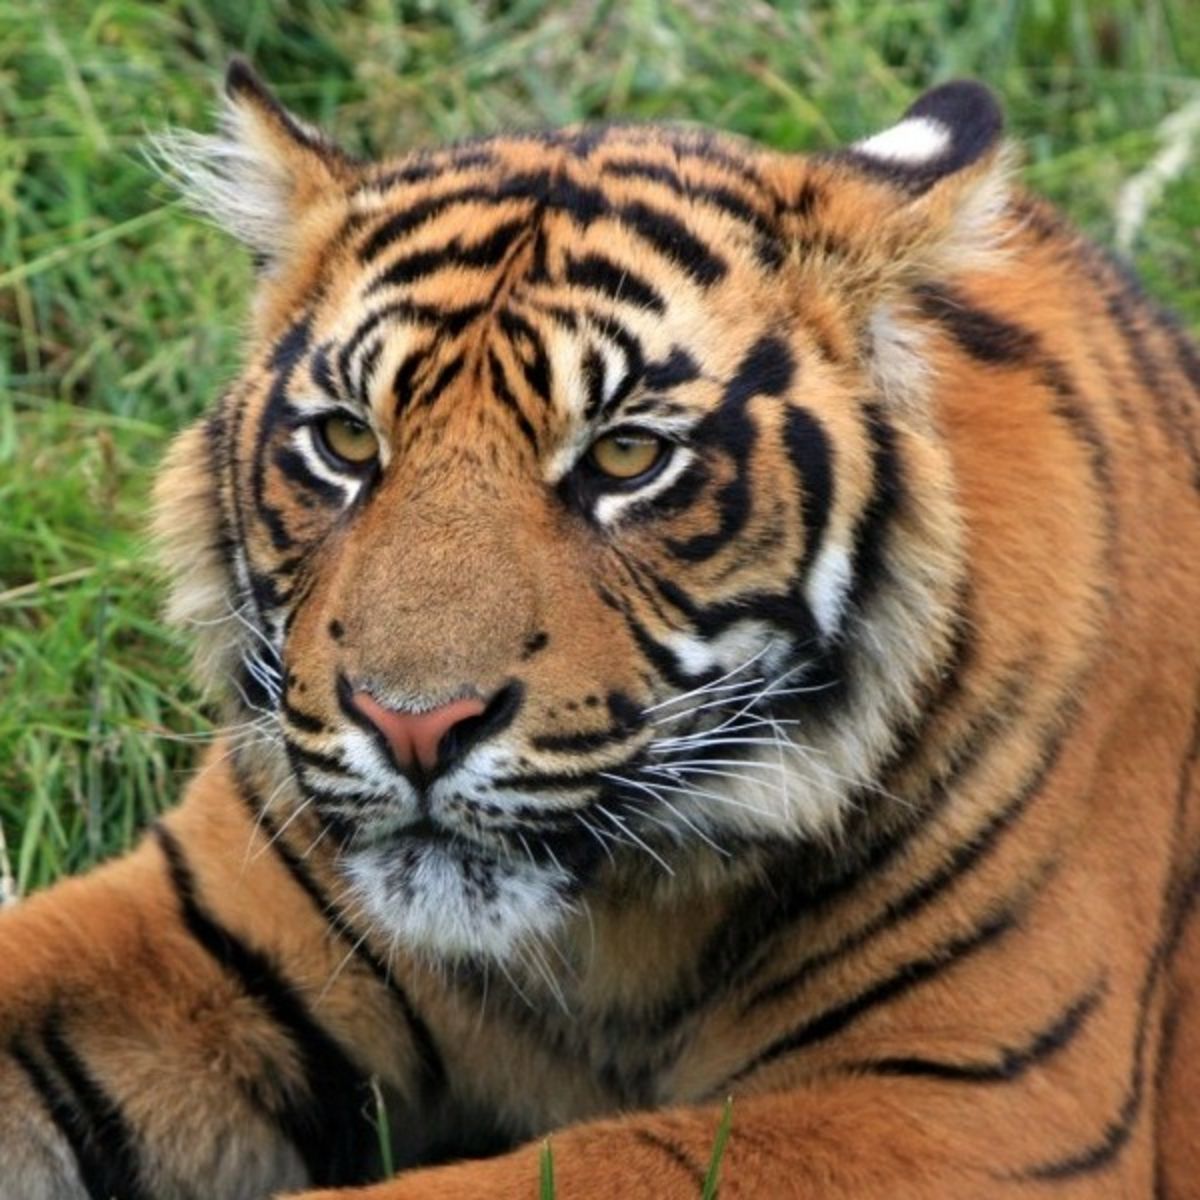 Sumatran tiger sitting by long green grass